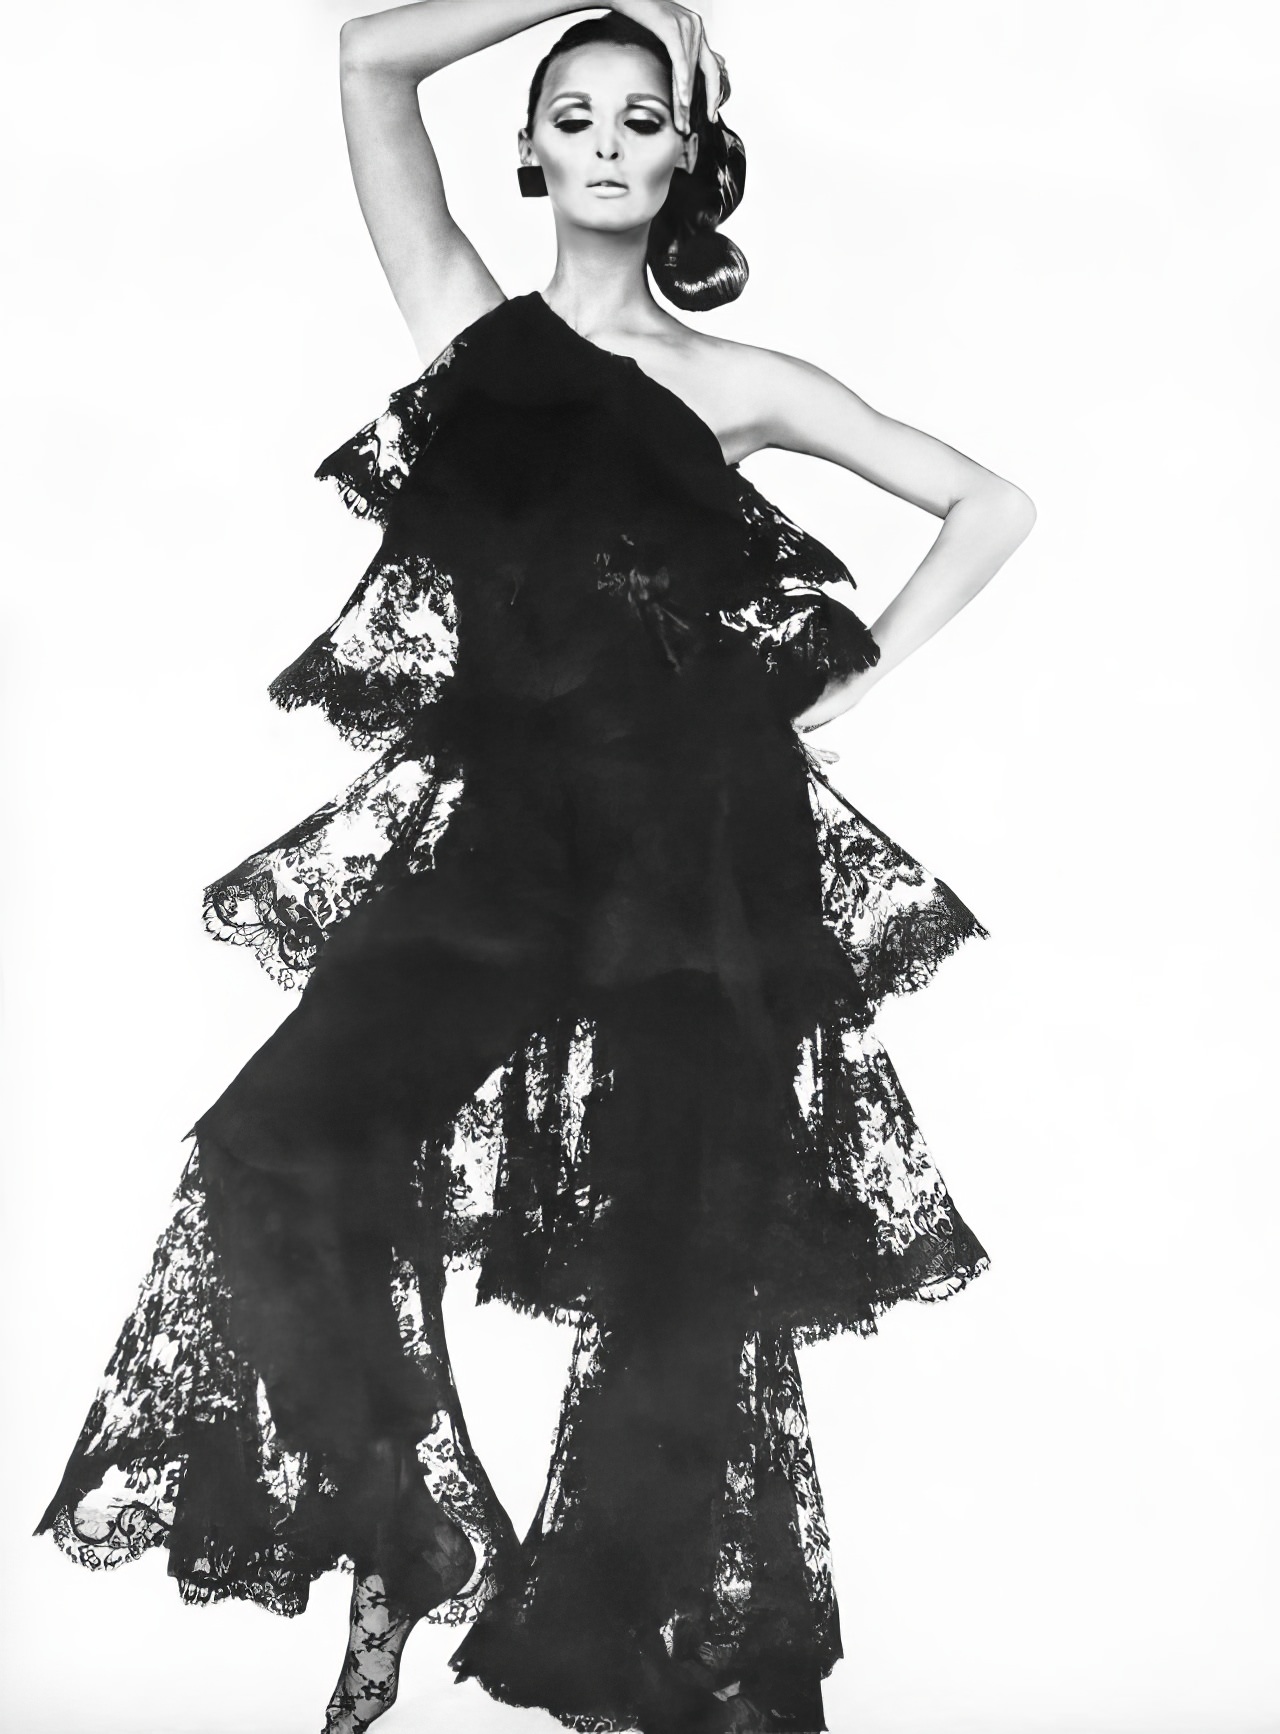 Samantha Jones in black lace pyjamas by Donald Brooks, Vogue, September 1, 1967.